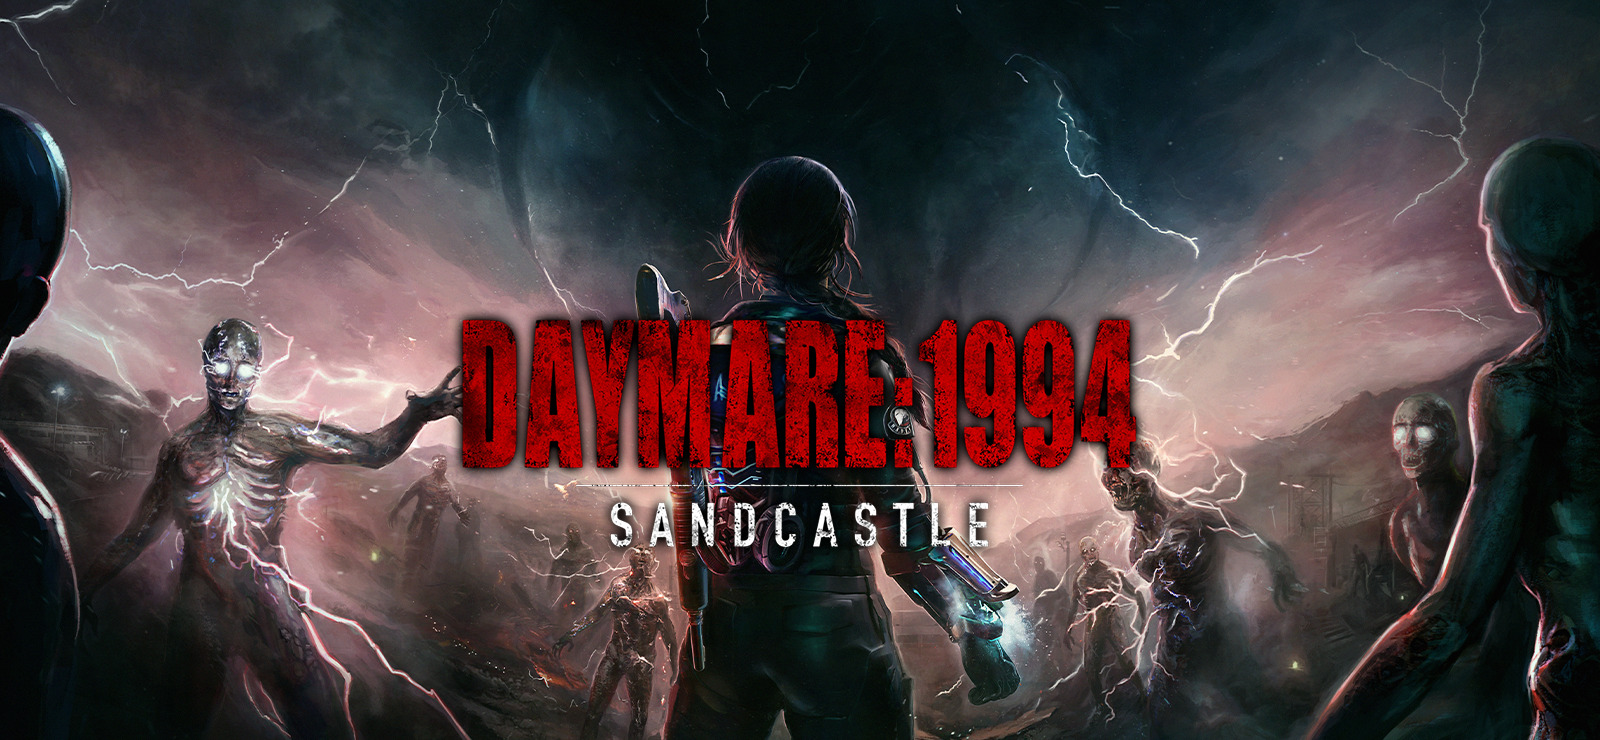 Daymare 1944 Sancastle